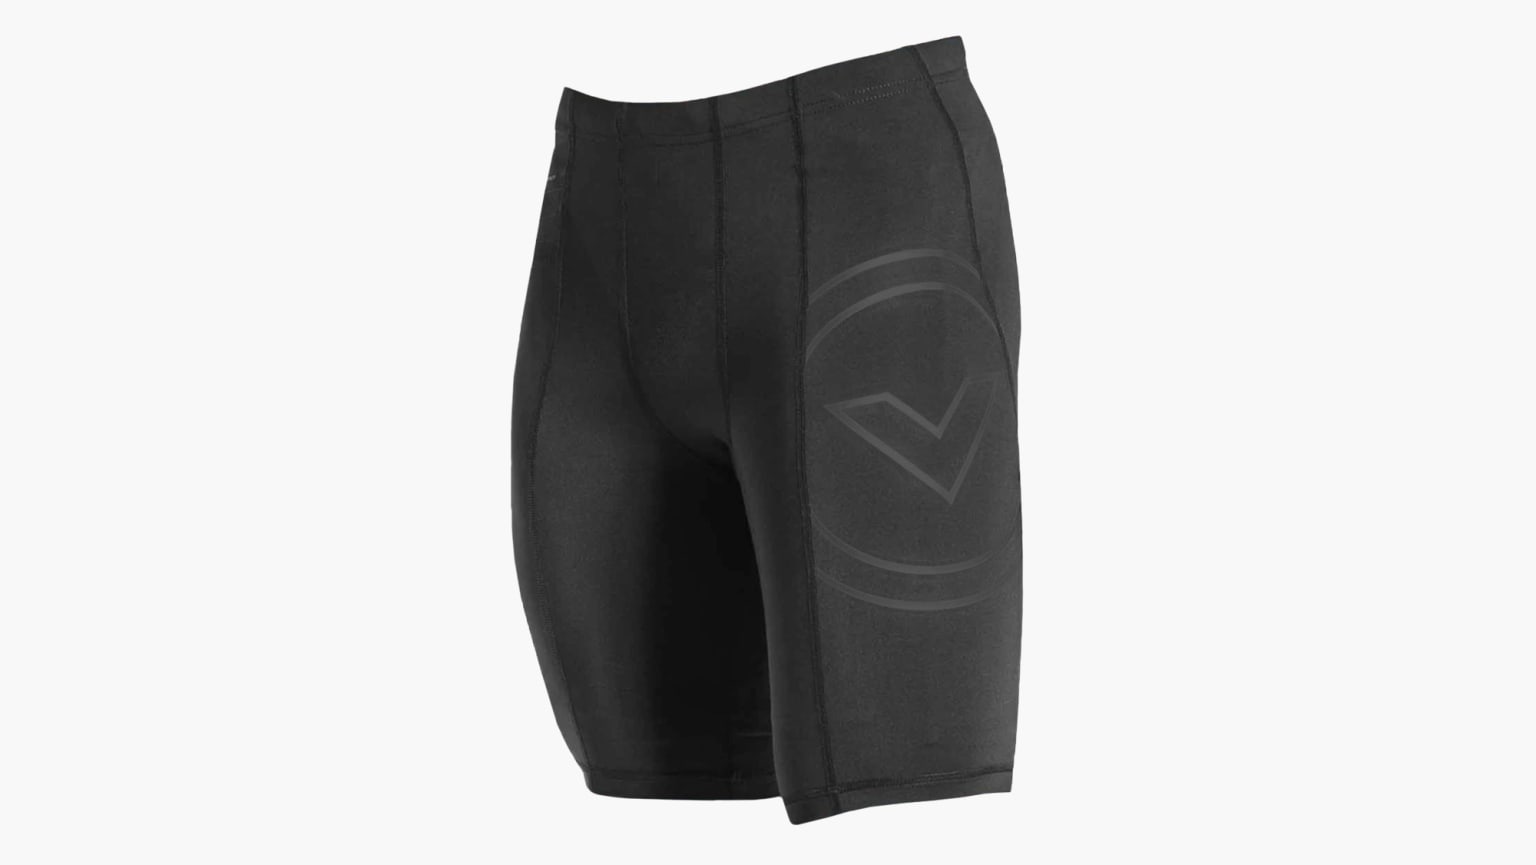 VIRUS Men's Compression Shorts - Black